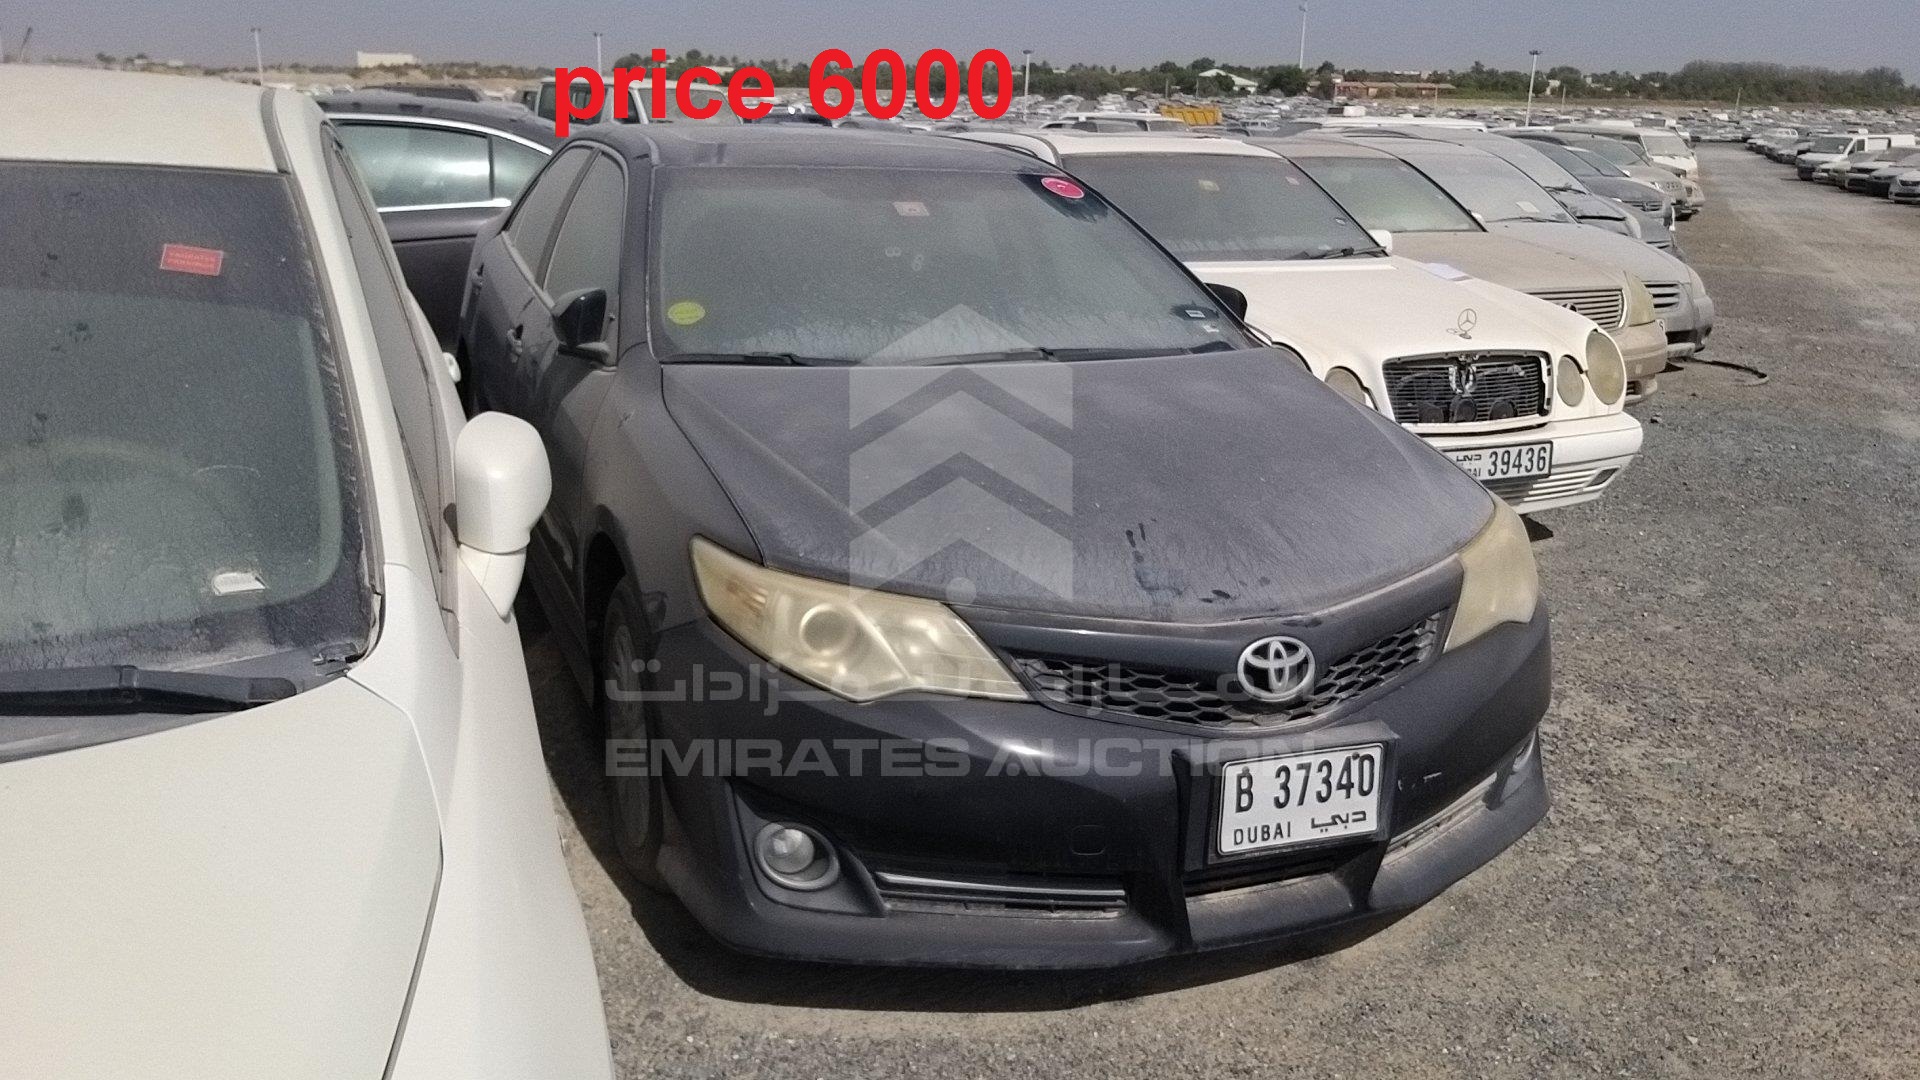 sheikh sobah automotive price 5000